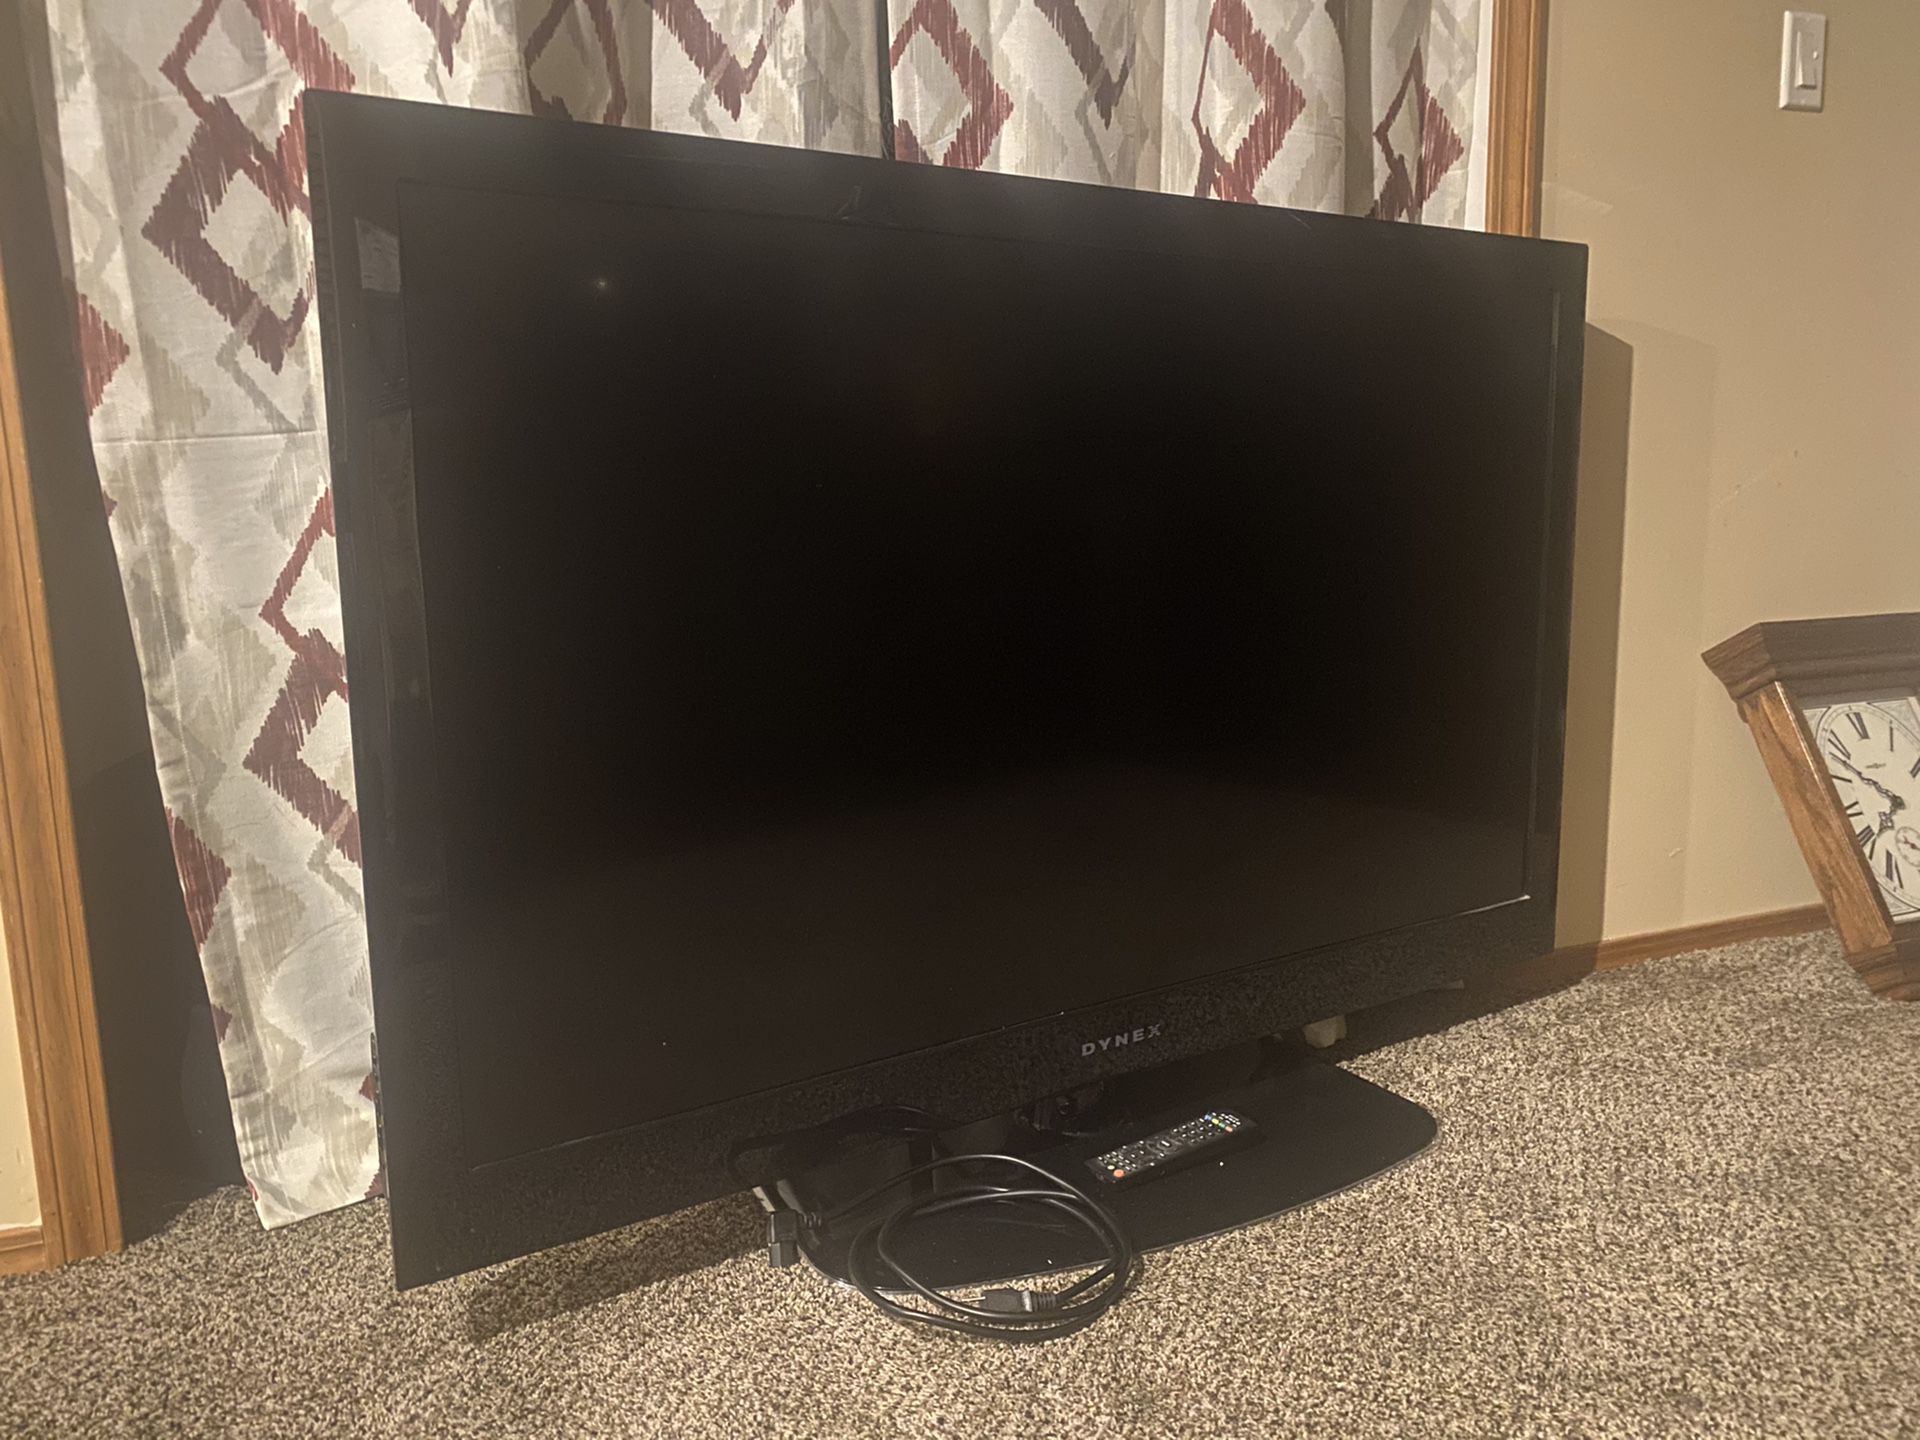 Dynex 55” flat screen TV